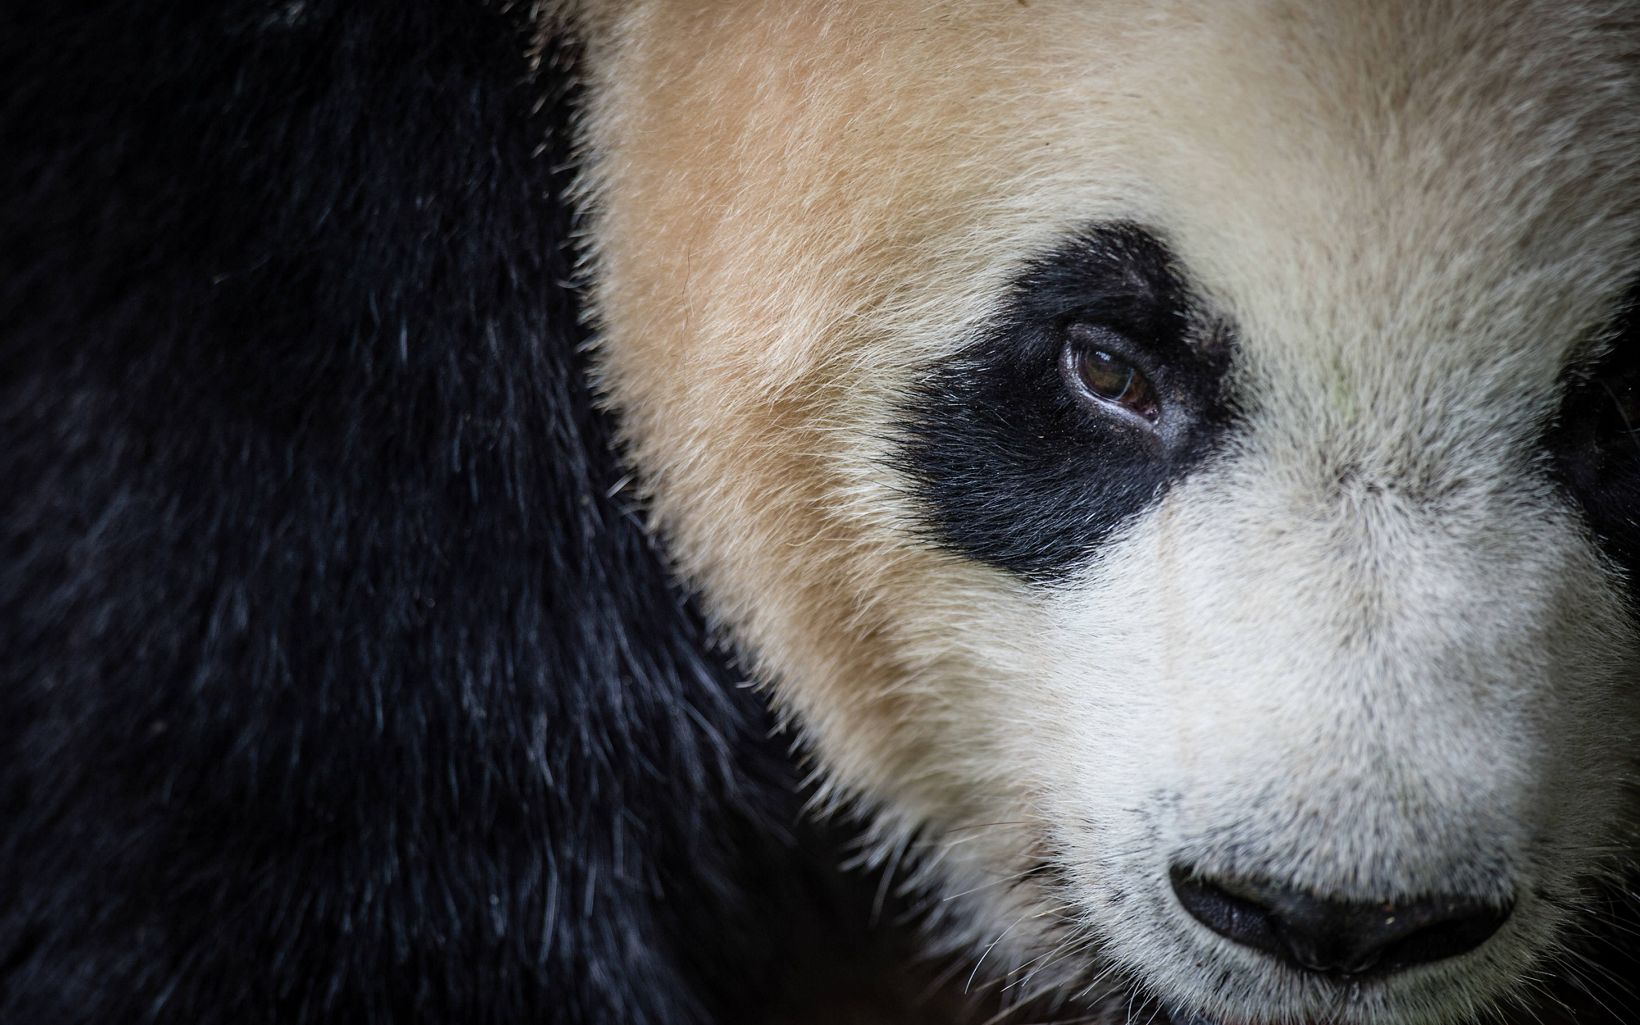 Giant panda At the Dujiangyan Panda Base outside of Chengdu in Sichuan Province, China. © Nick Hall